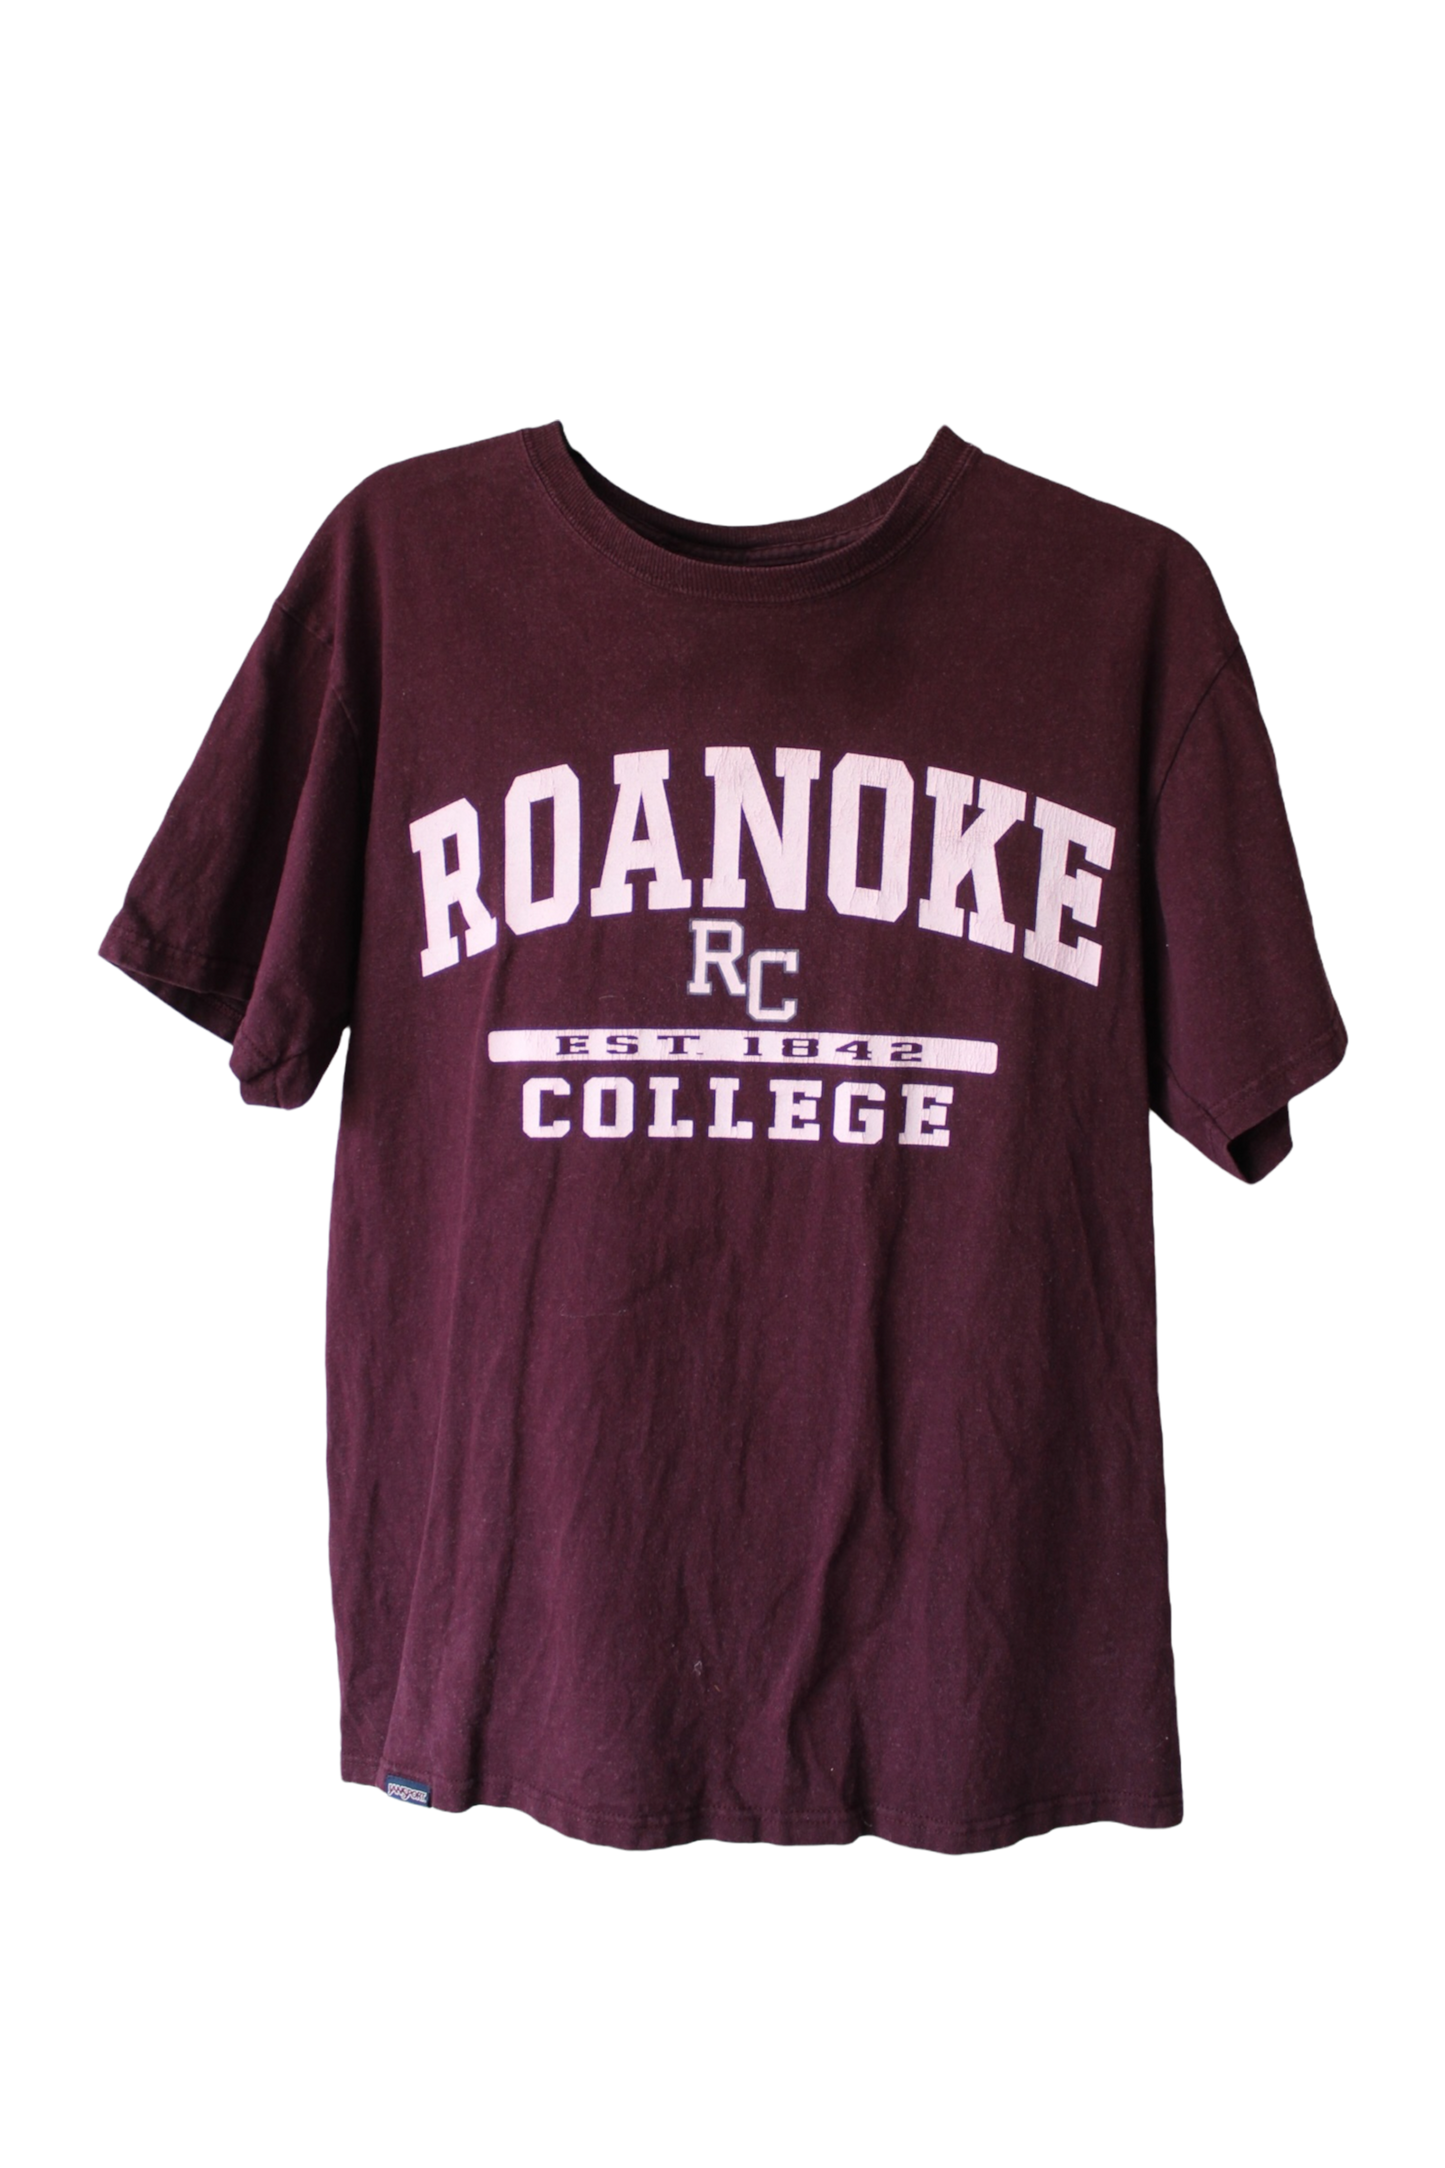 Roanoke College Tee